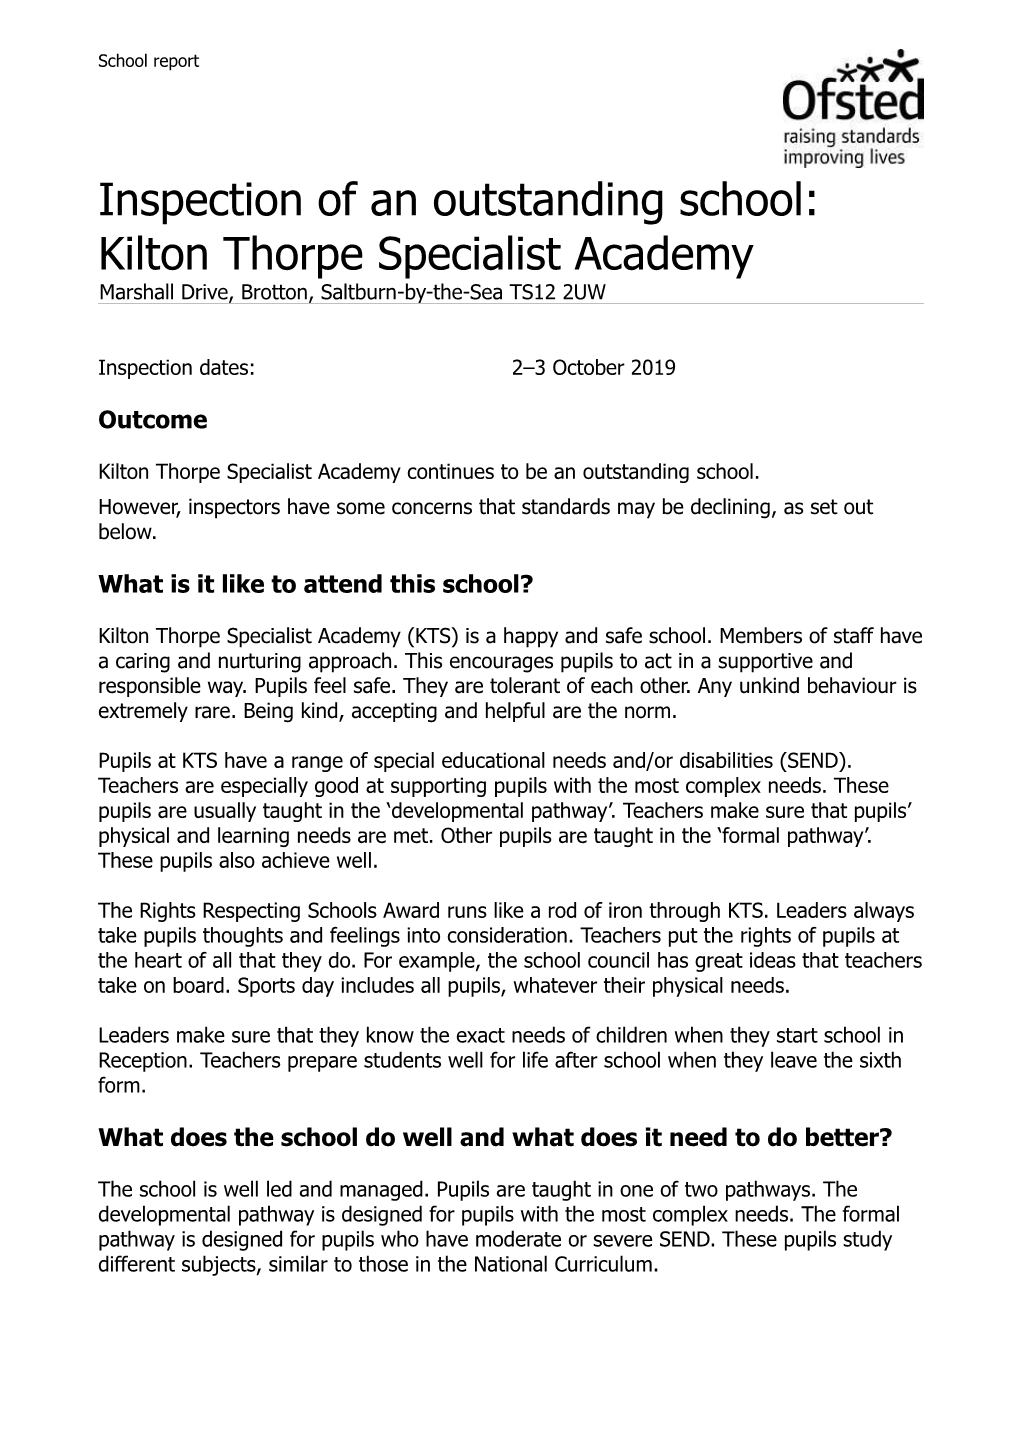 Inspection of an Outstanding School: Kilton Thorpe Specialist Academy Marshall Drive, Brotton, Saltburn-By-The-Sea TS12 2UW